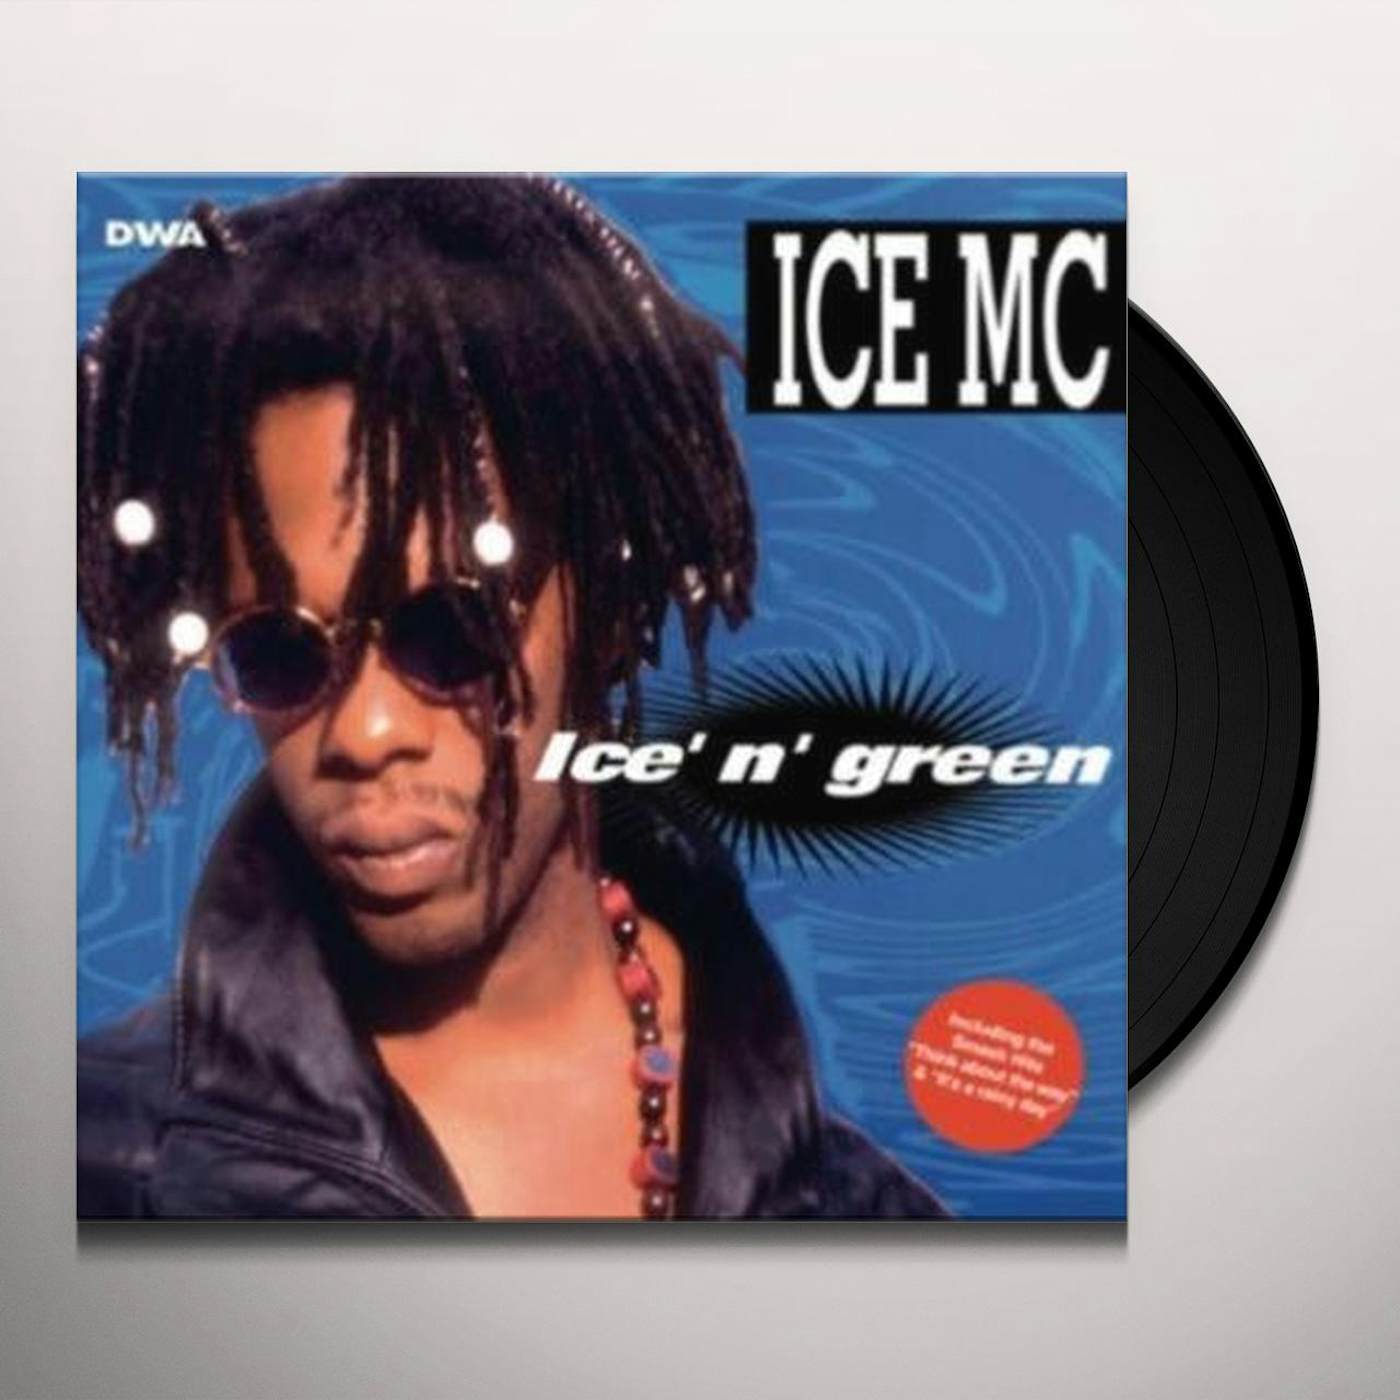 Ice MC - Russian Roulette 